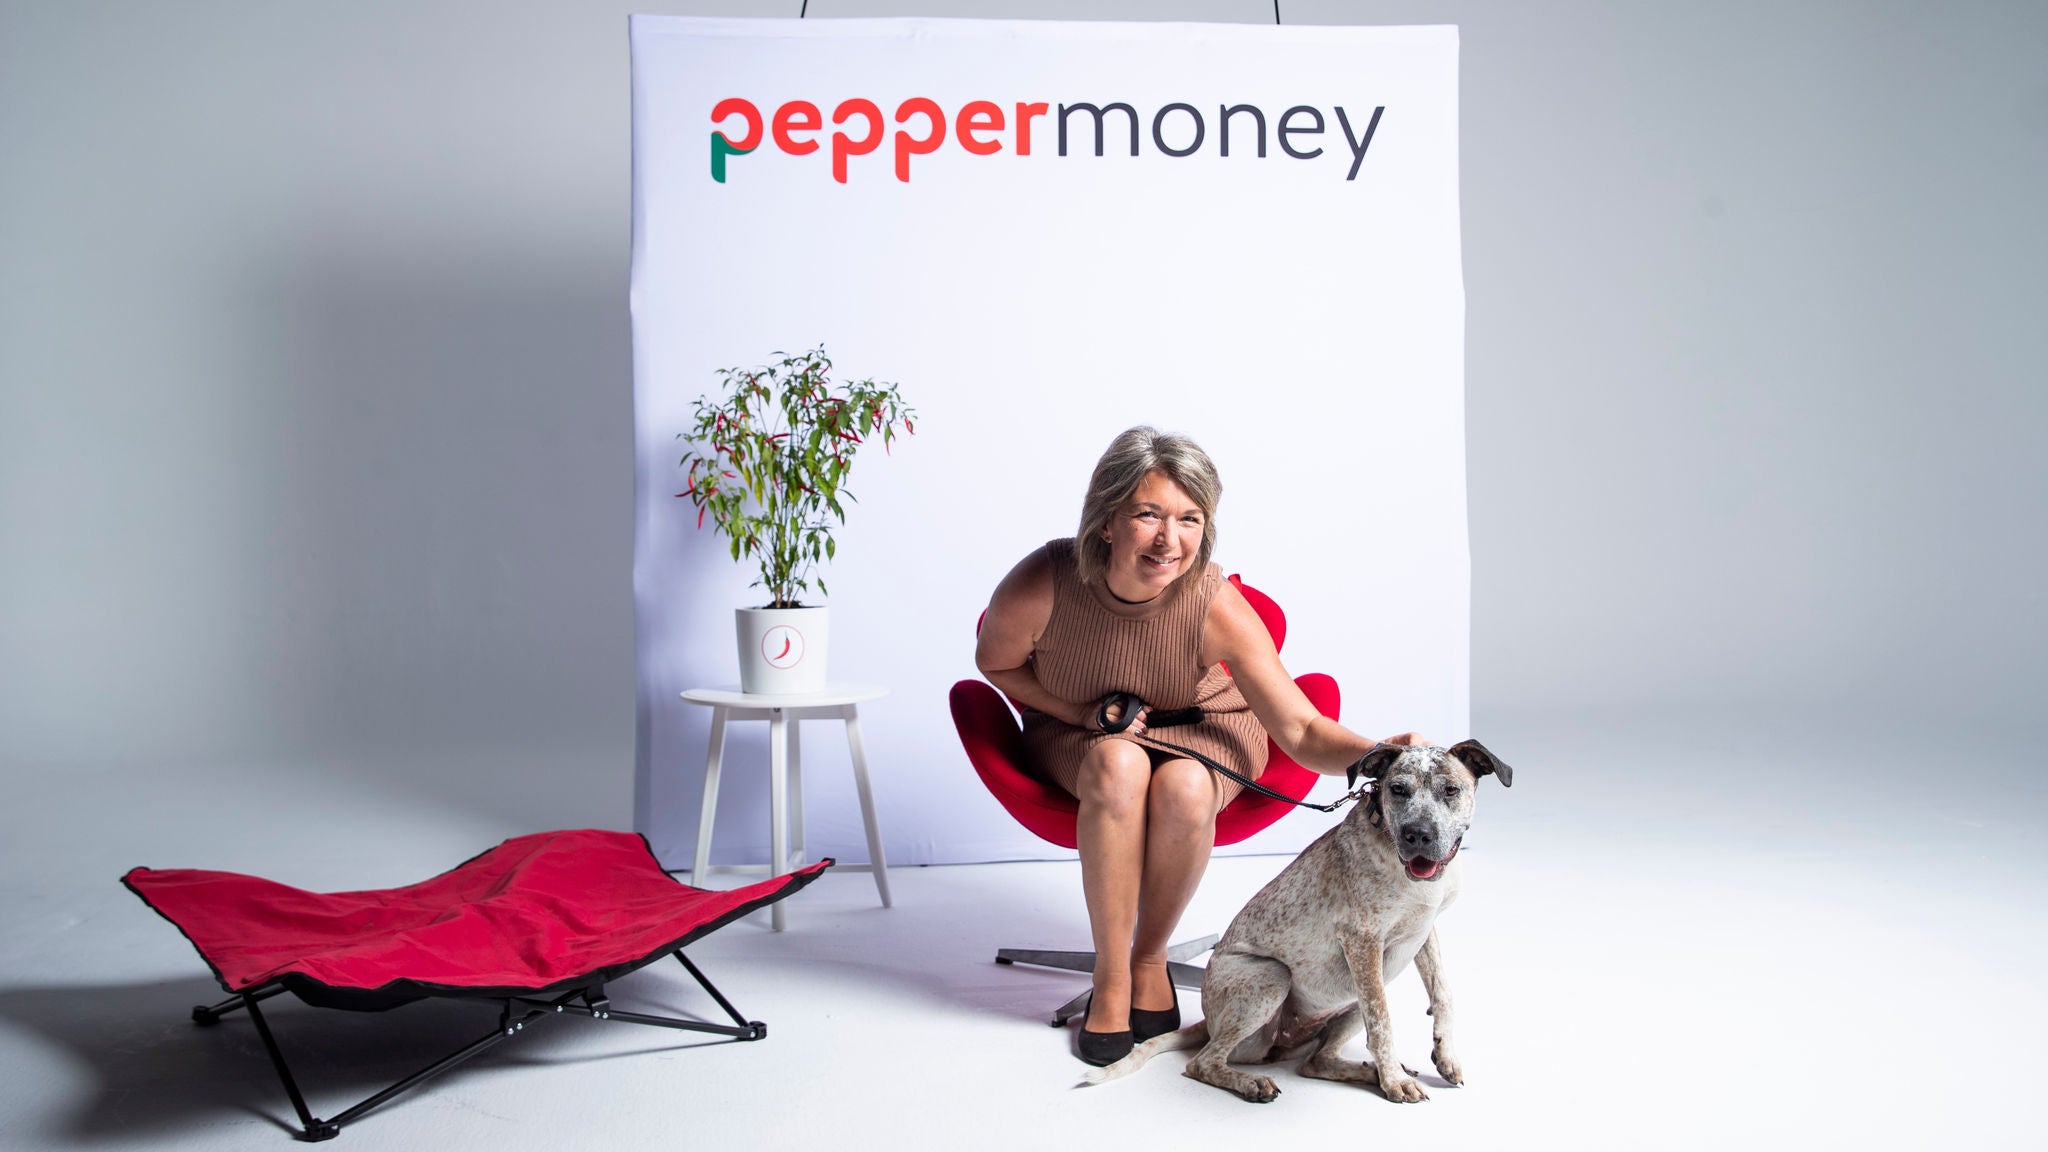 Pepper Money customer Marieke discusses her home loan journey